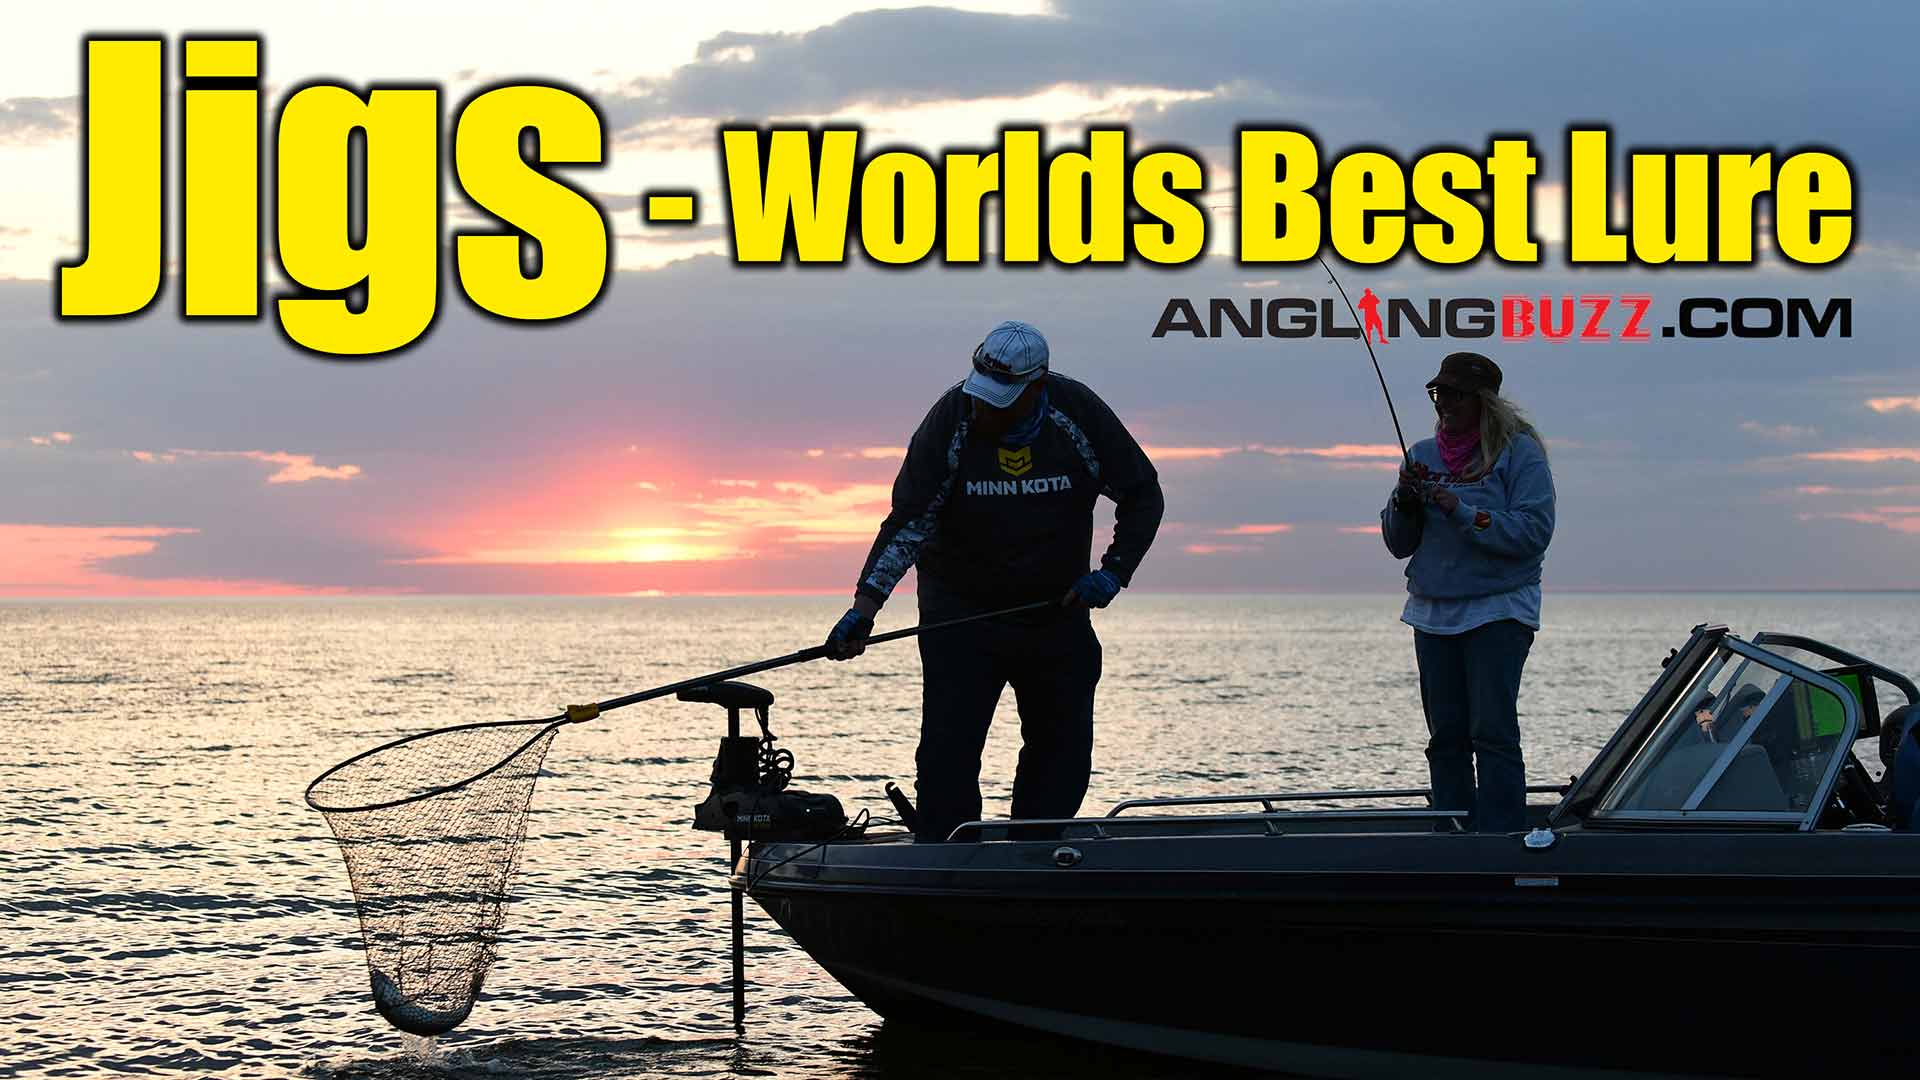 worlds best fishing lure